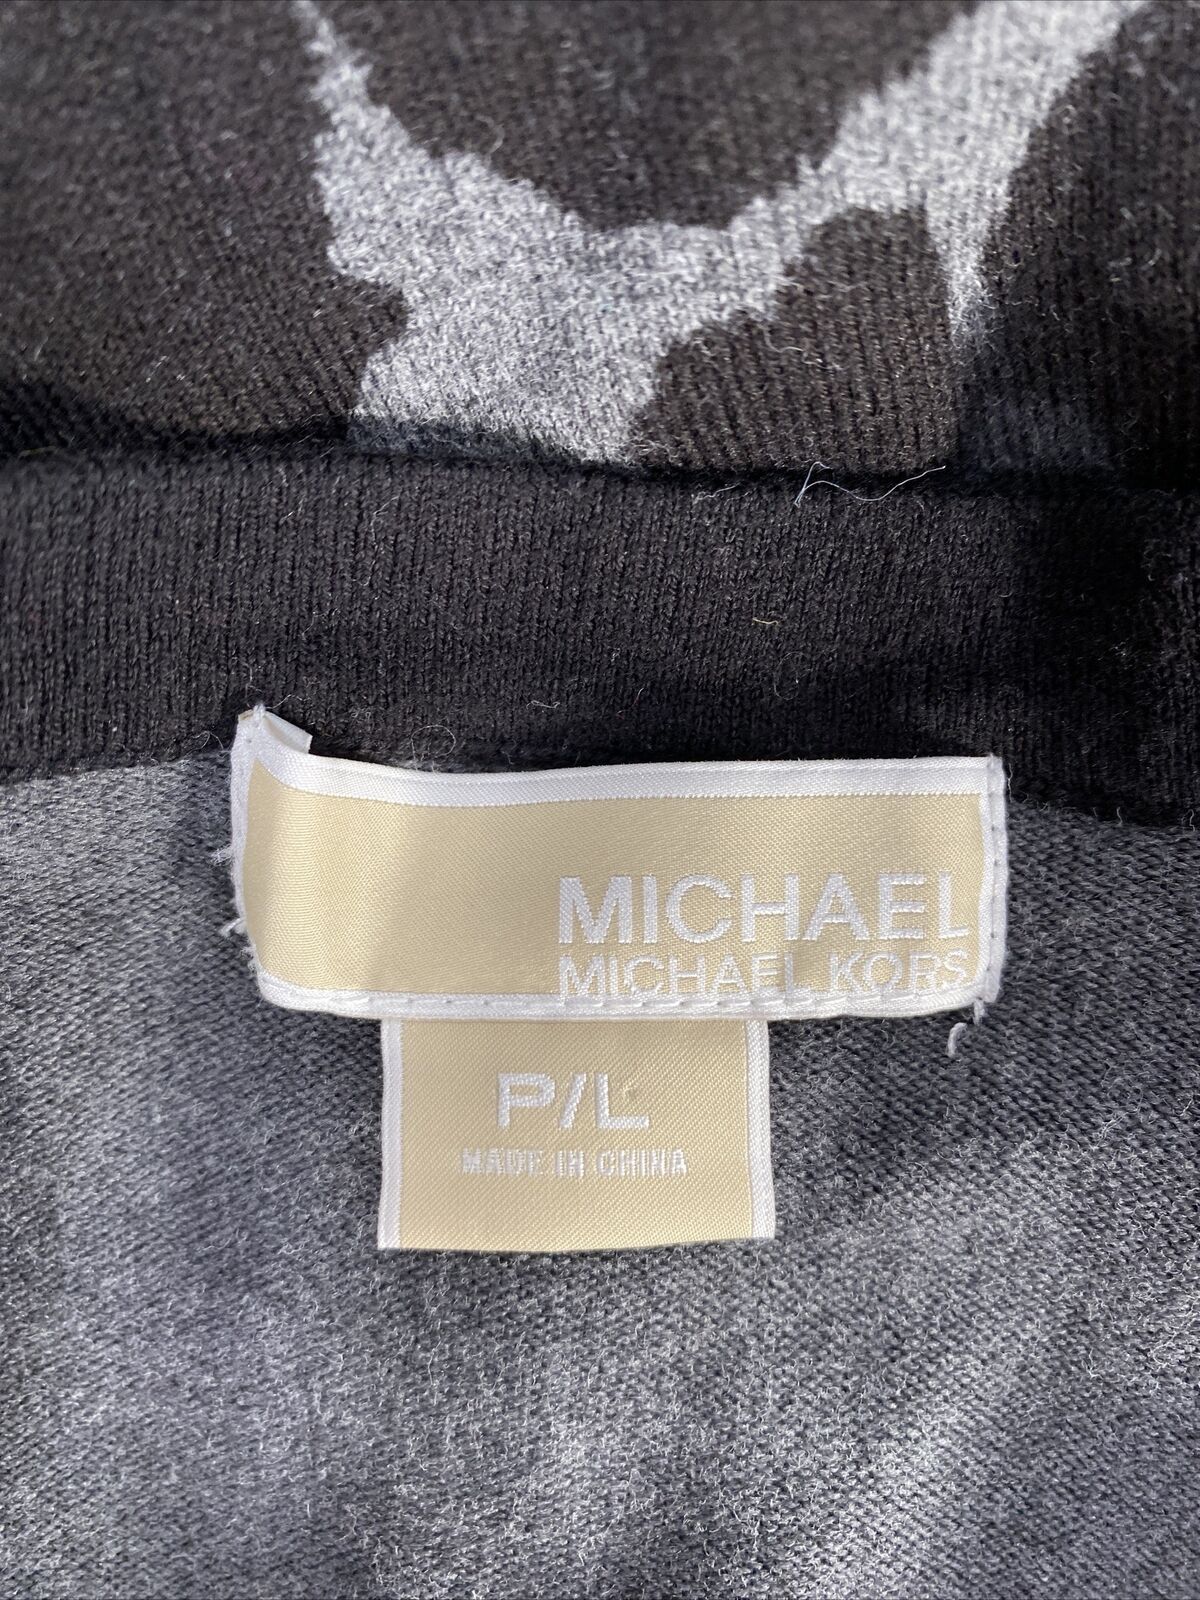 Michael Kors Women's Black/Gray Long Sleeve Button Up Cardigan - Petite L